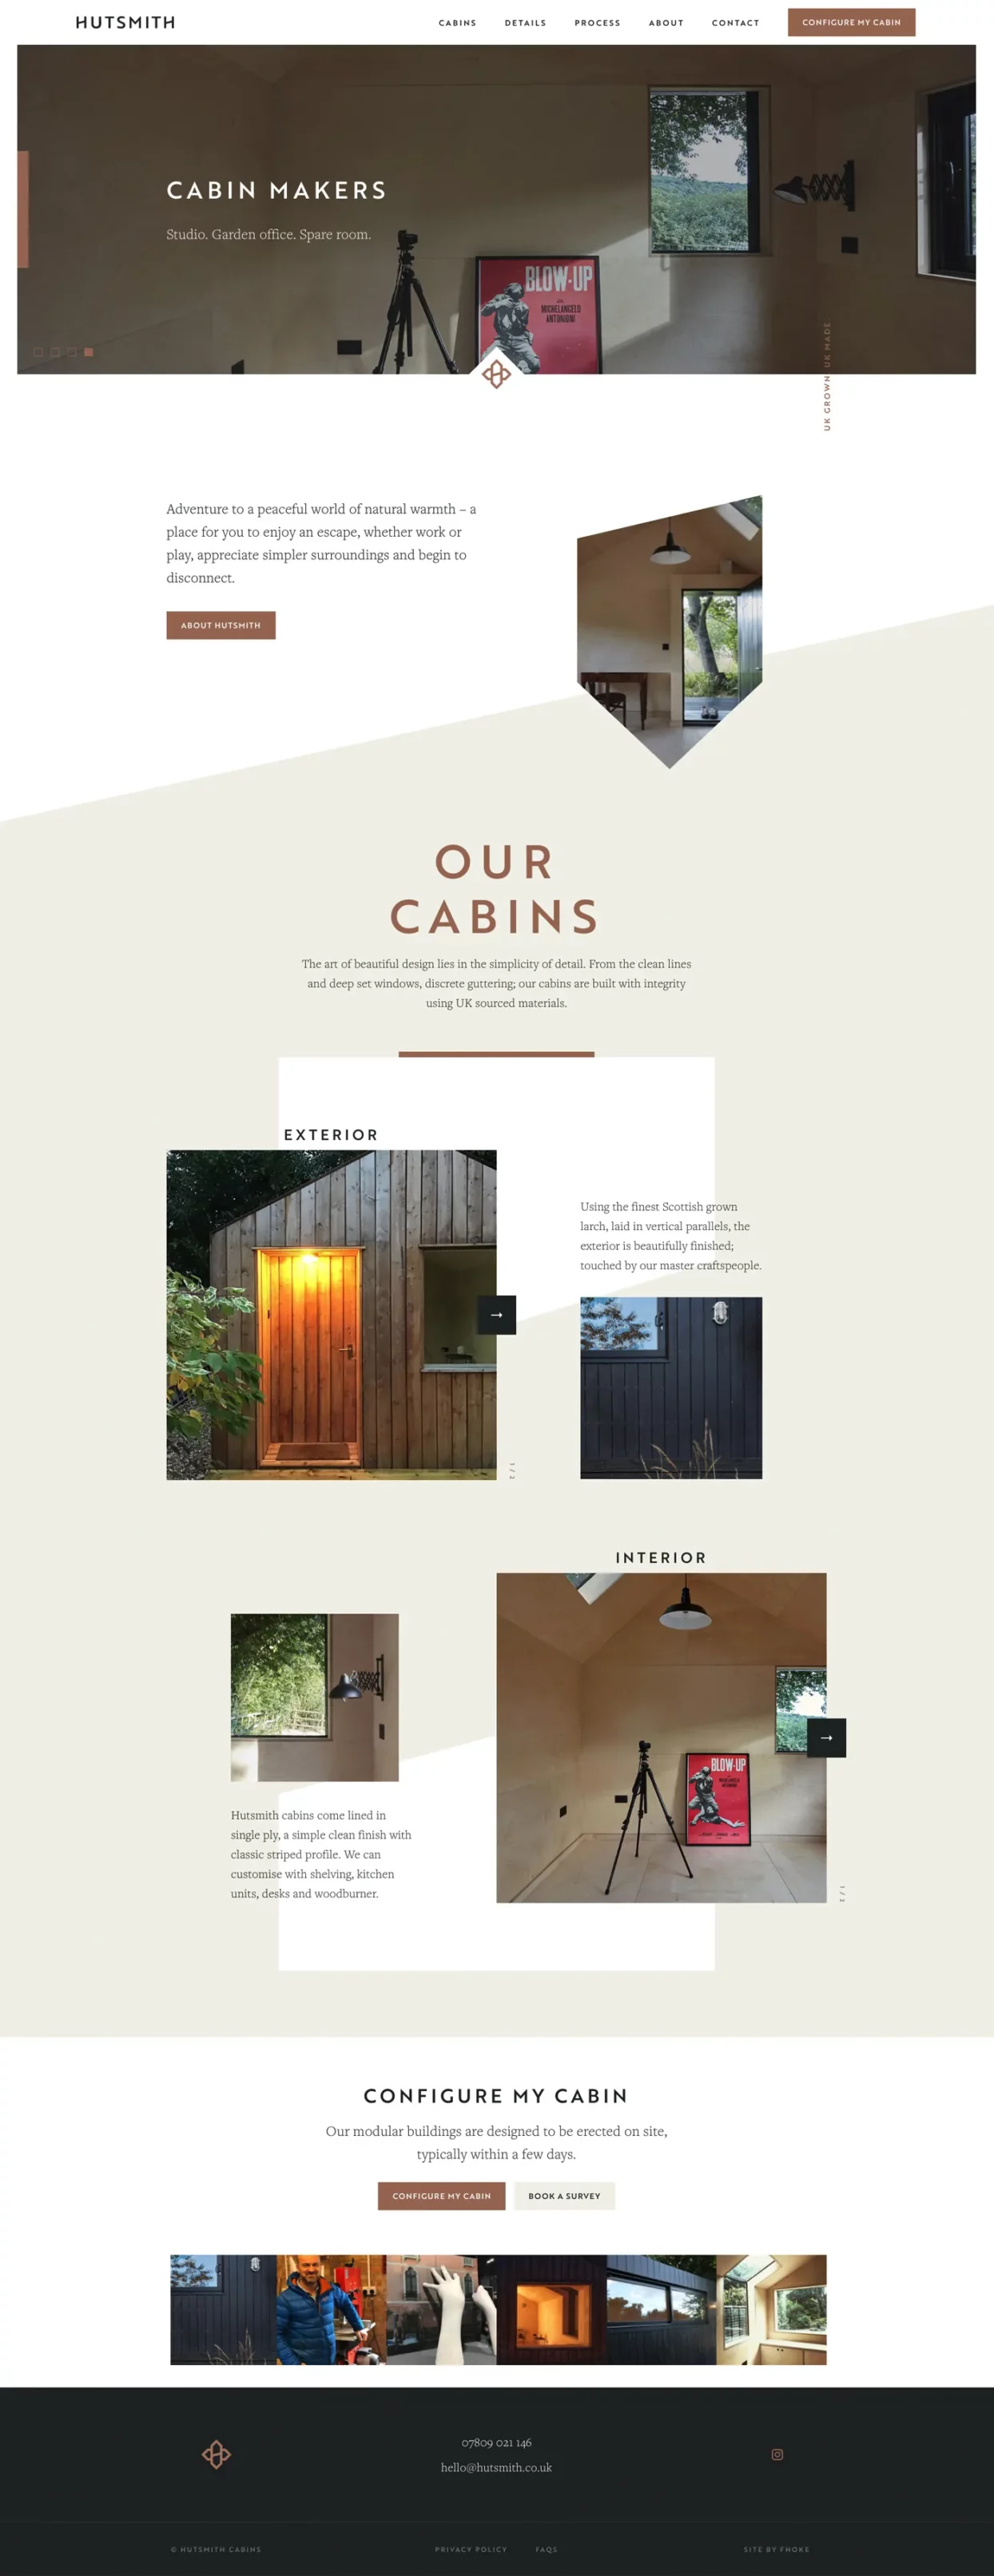 Hutsmith Cabin Makers WordPress website designed by web design agency Fhoke.